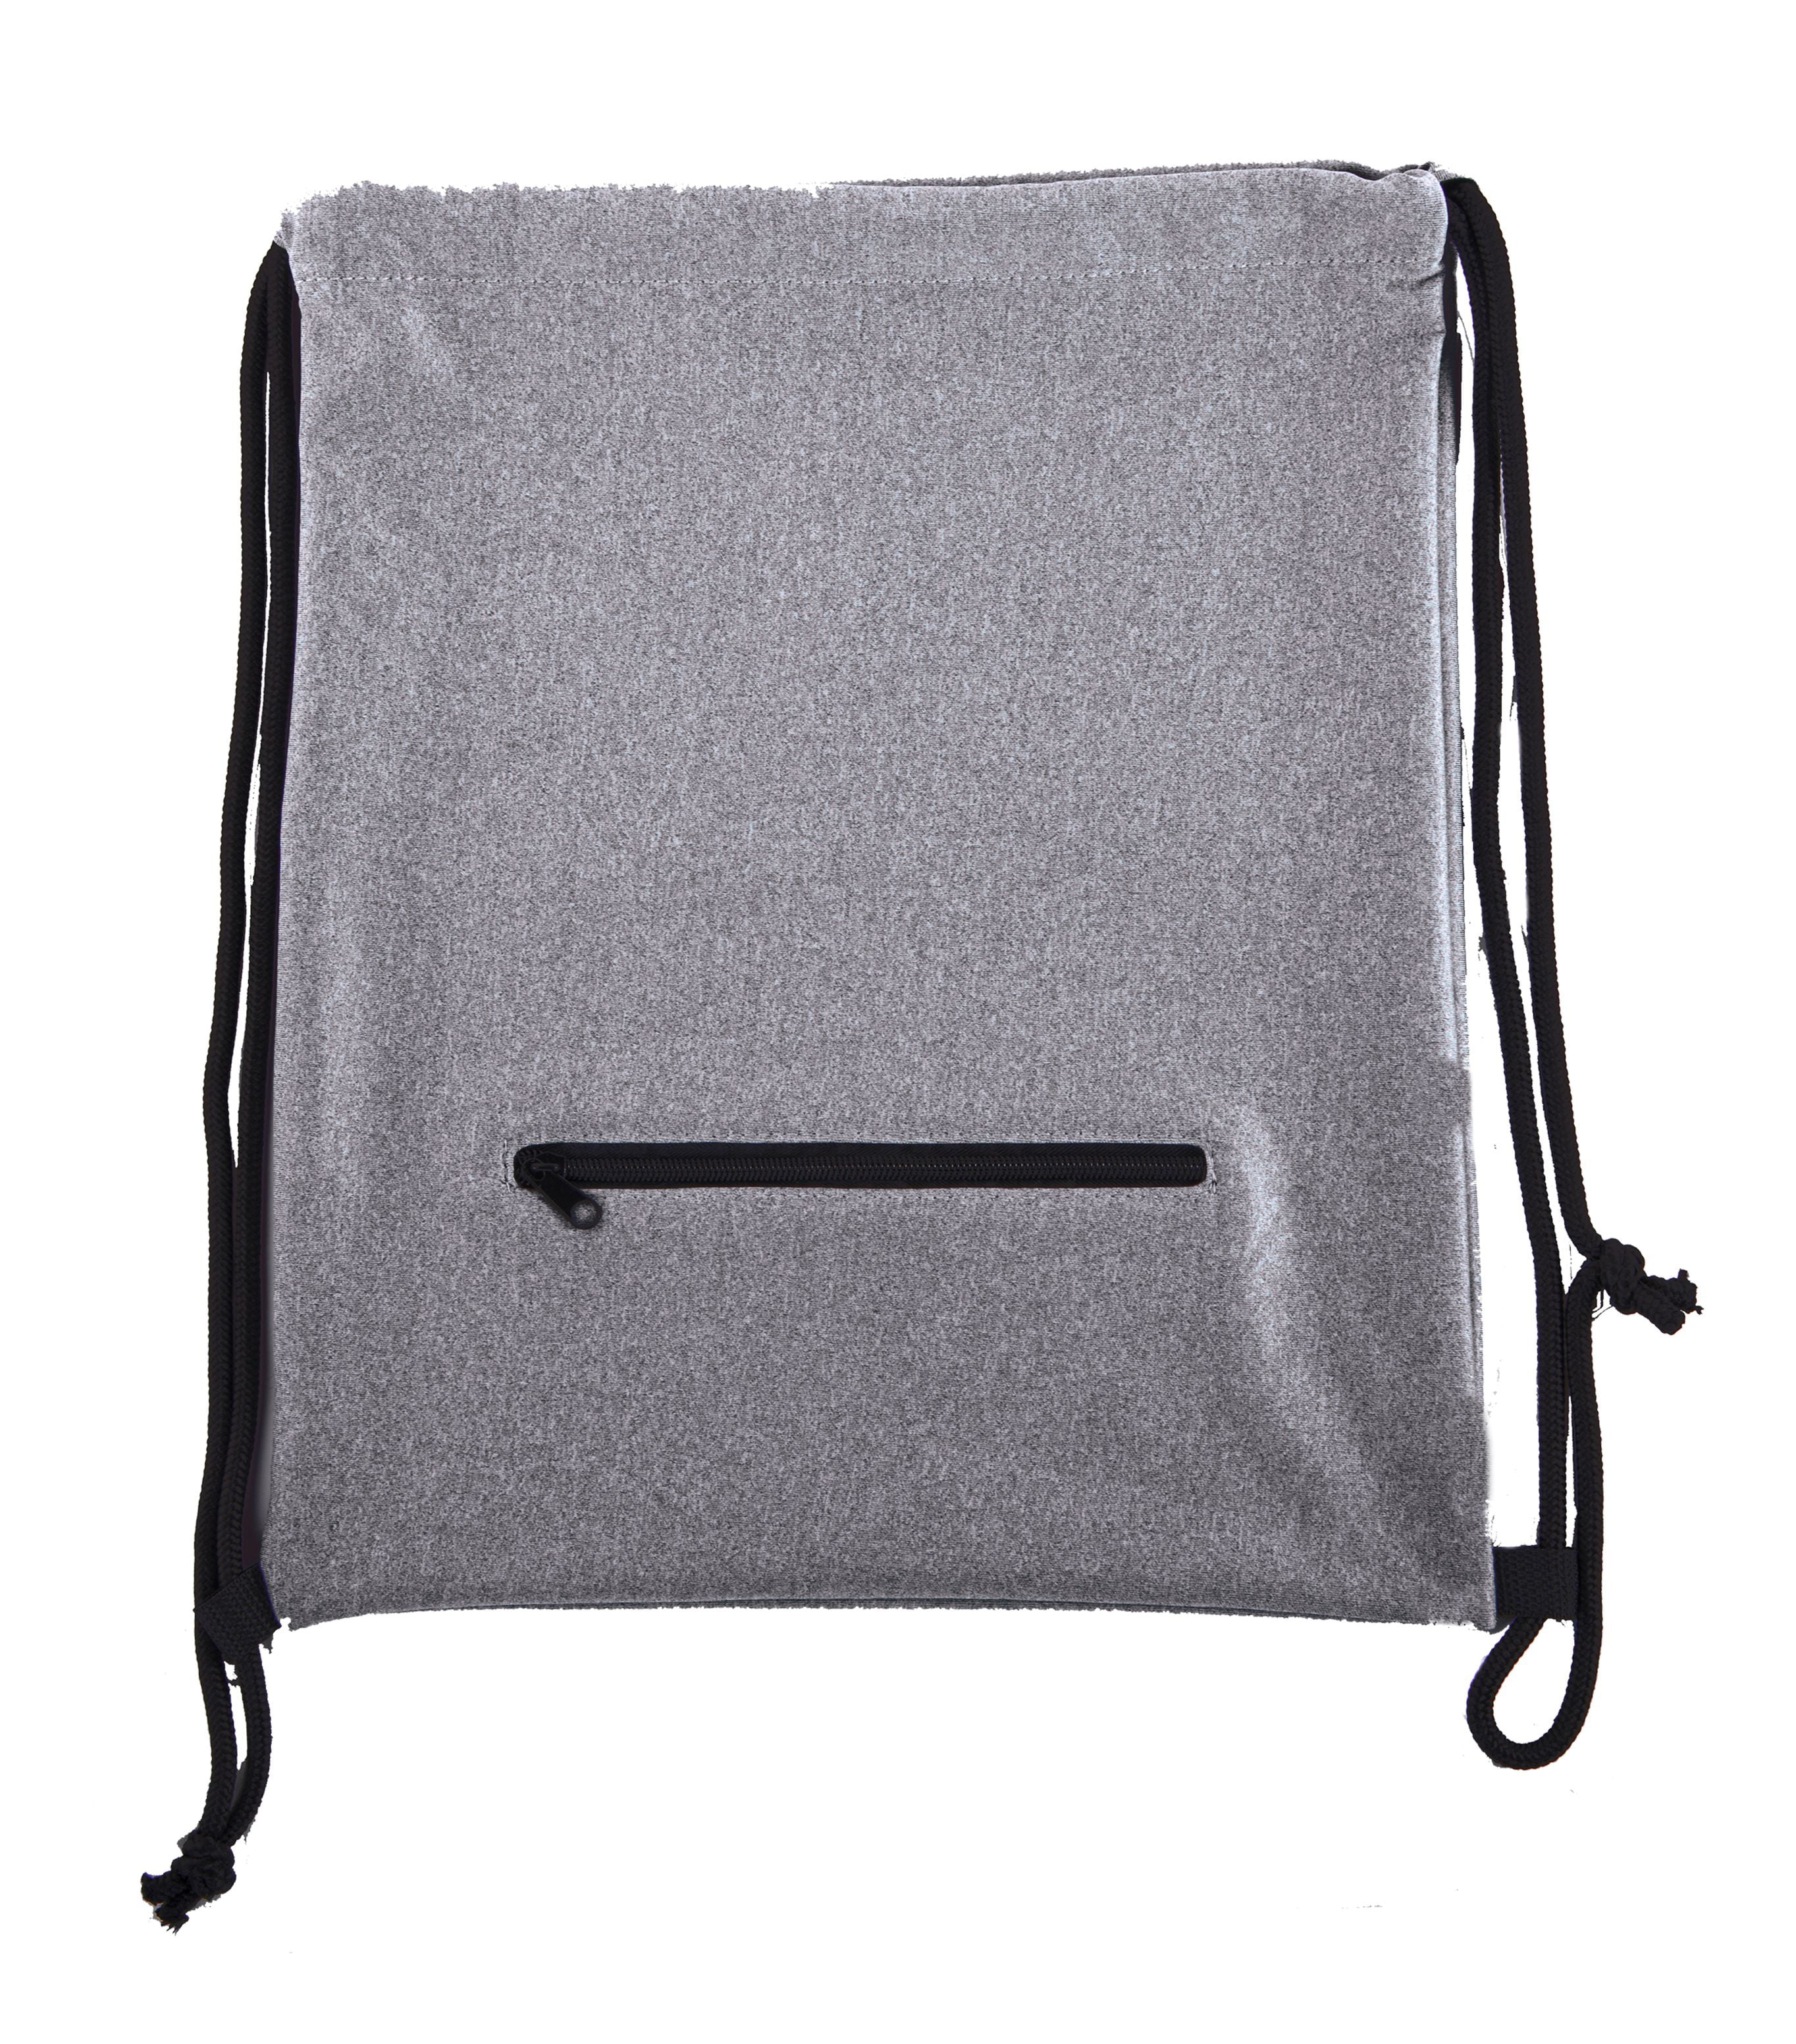 Soft Texture Drawstring Backpack - Quick Access Zipper Pocket 